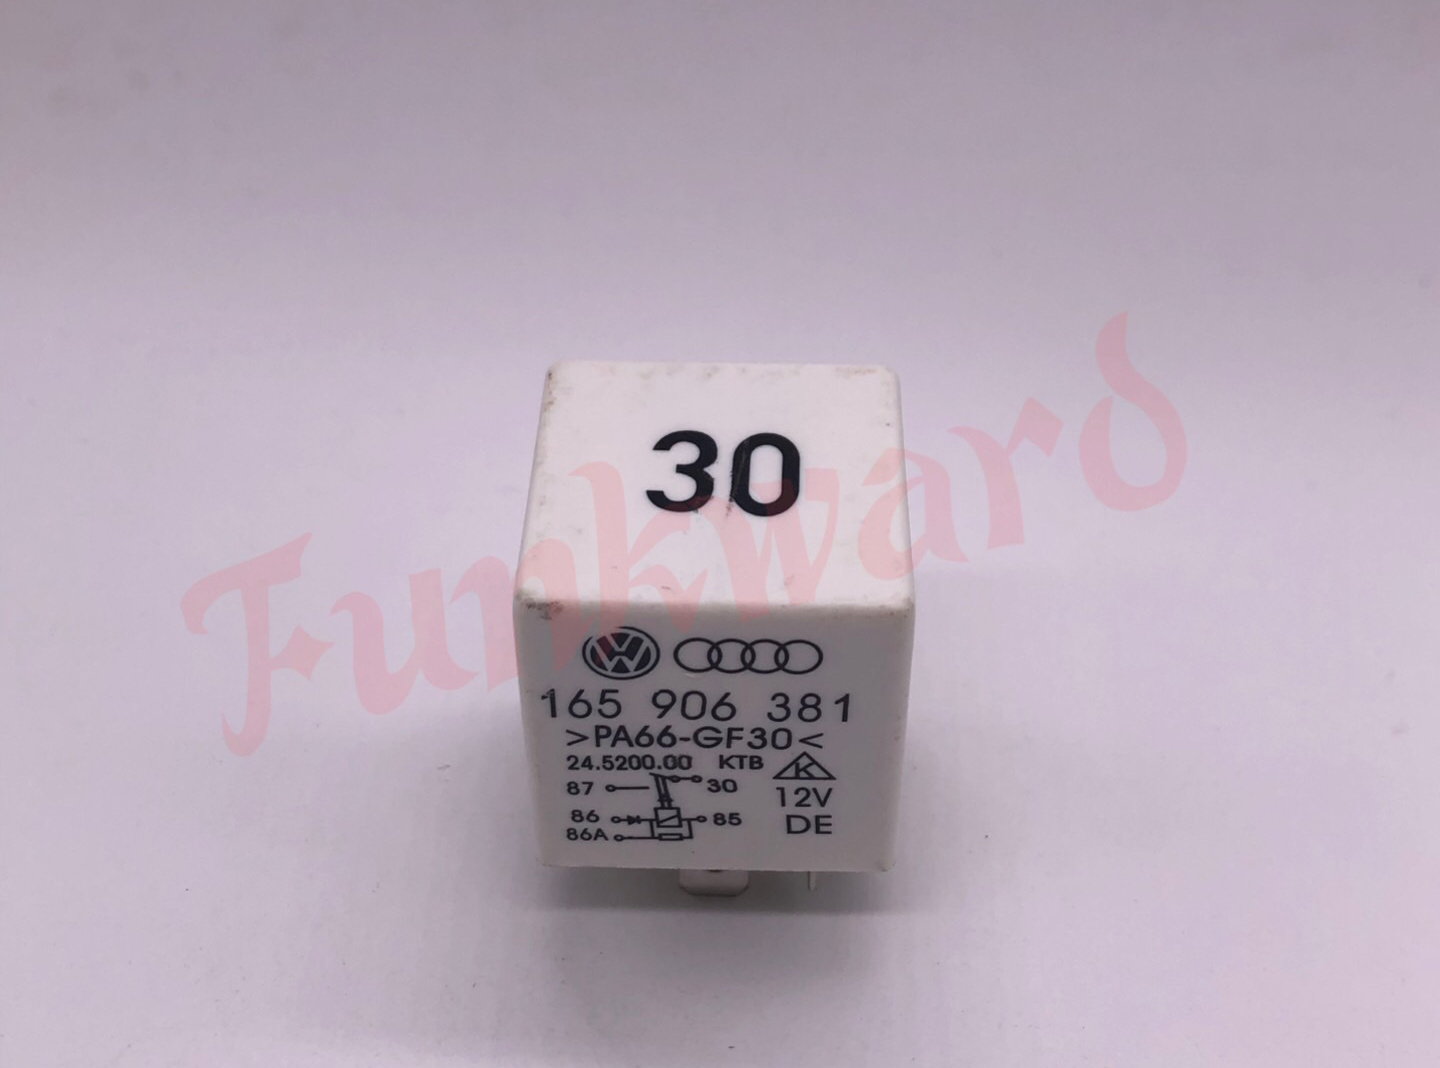 NEW Audi (9901) VW (9003) Control Module Relay 165 906